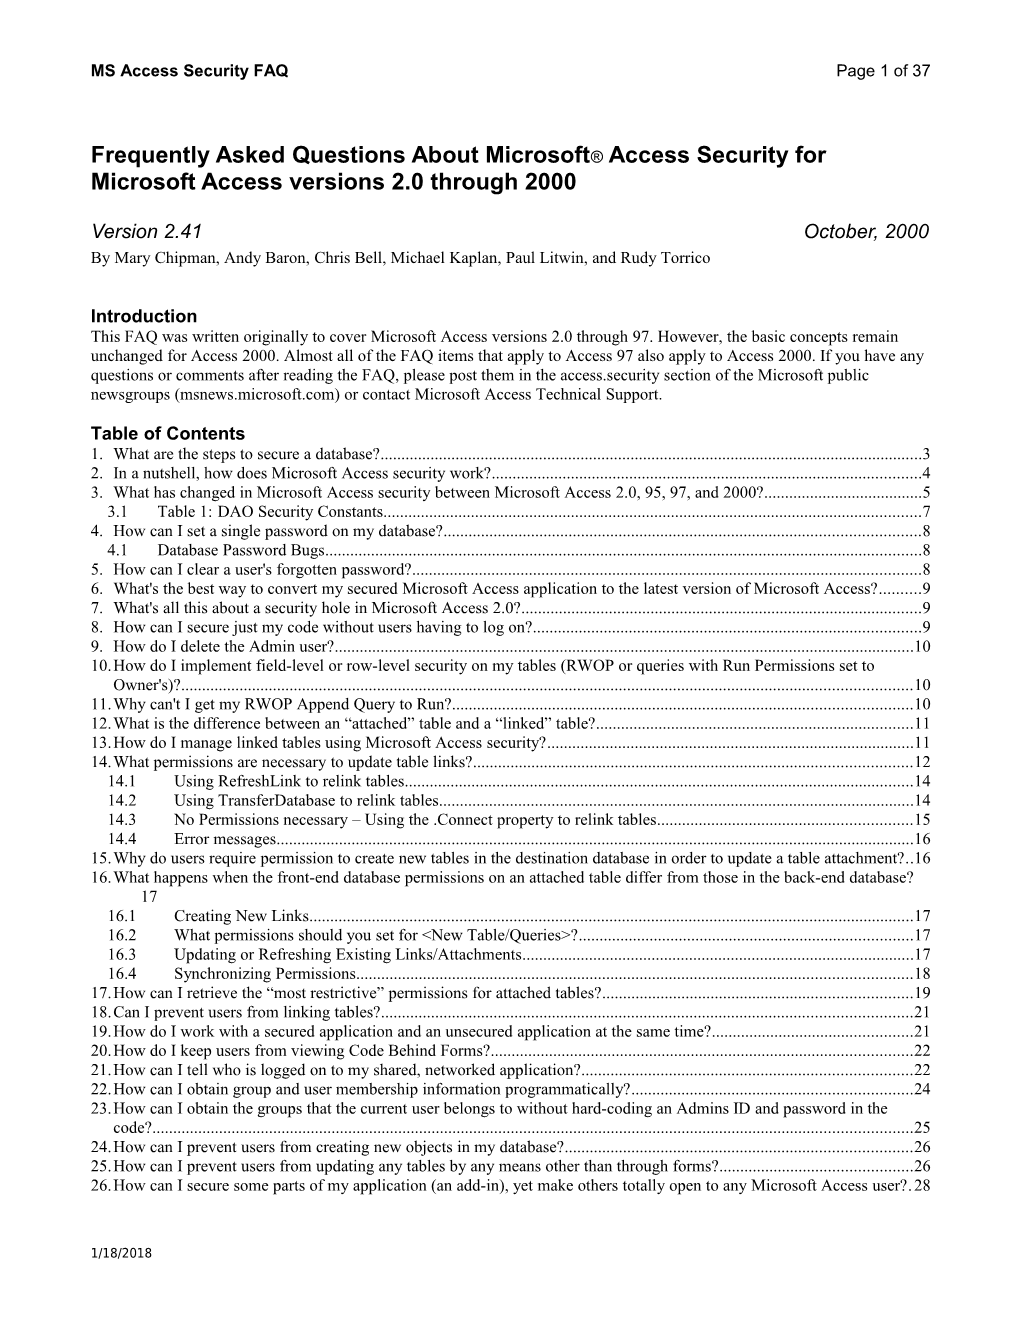 Access 2.0/95 Security FAQ